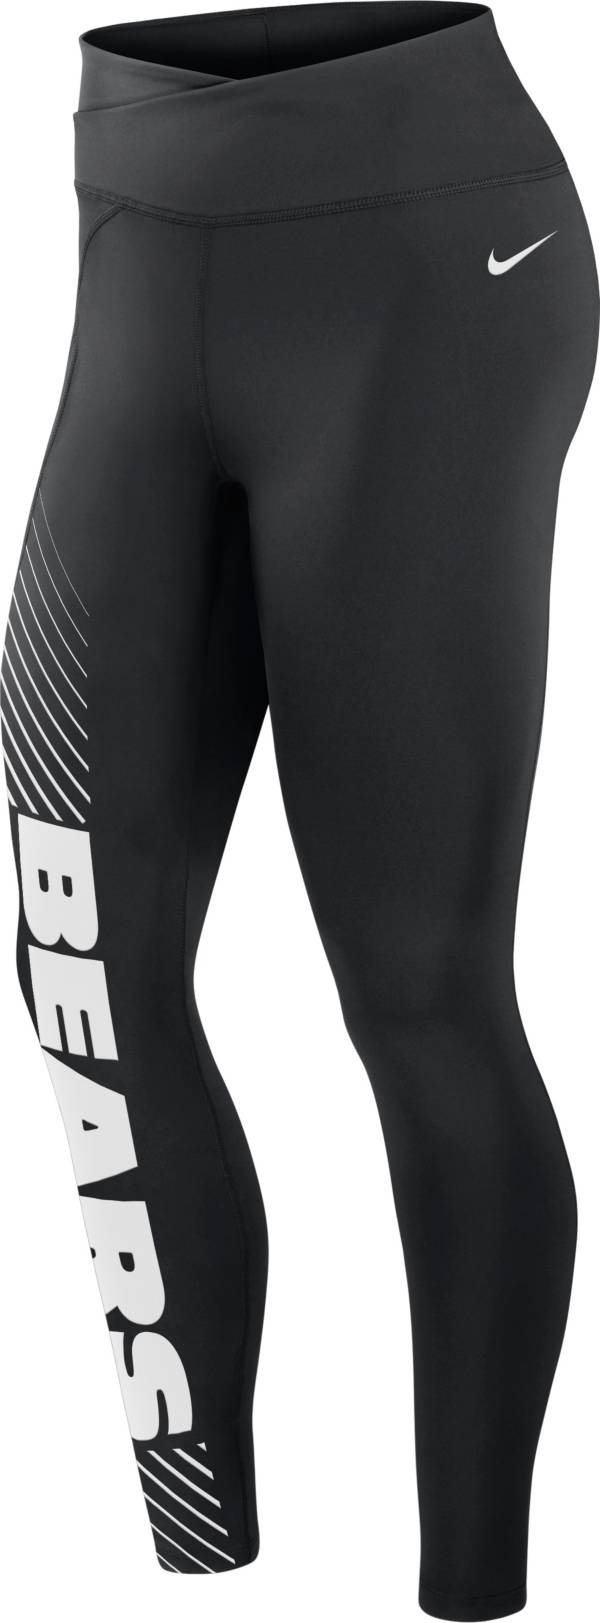 Nike Women's Chicago Bears Yard Line Black Leggings product image